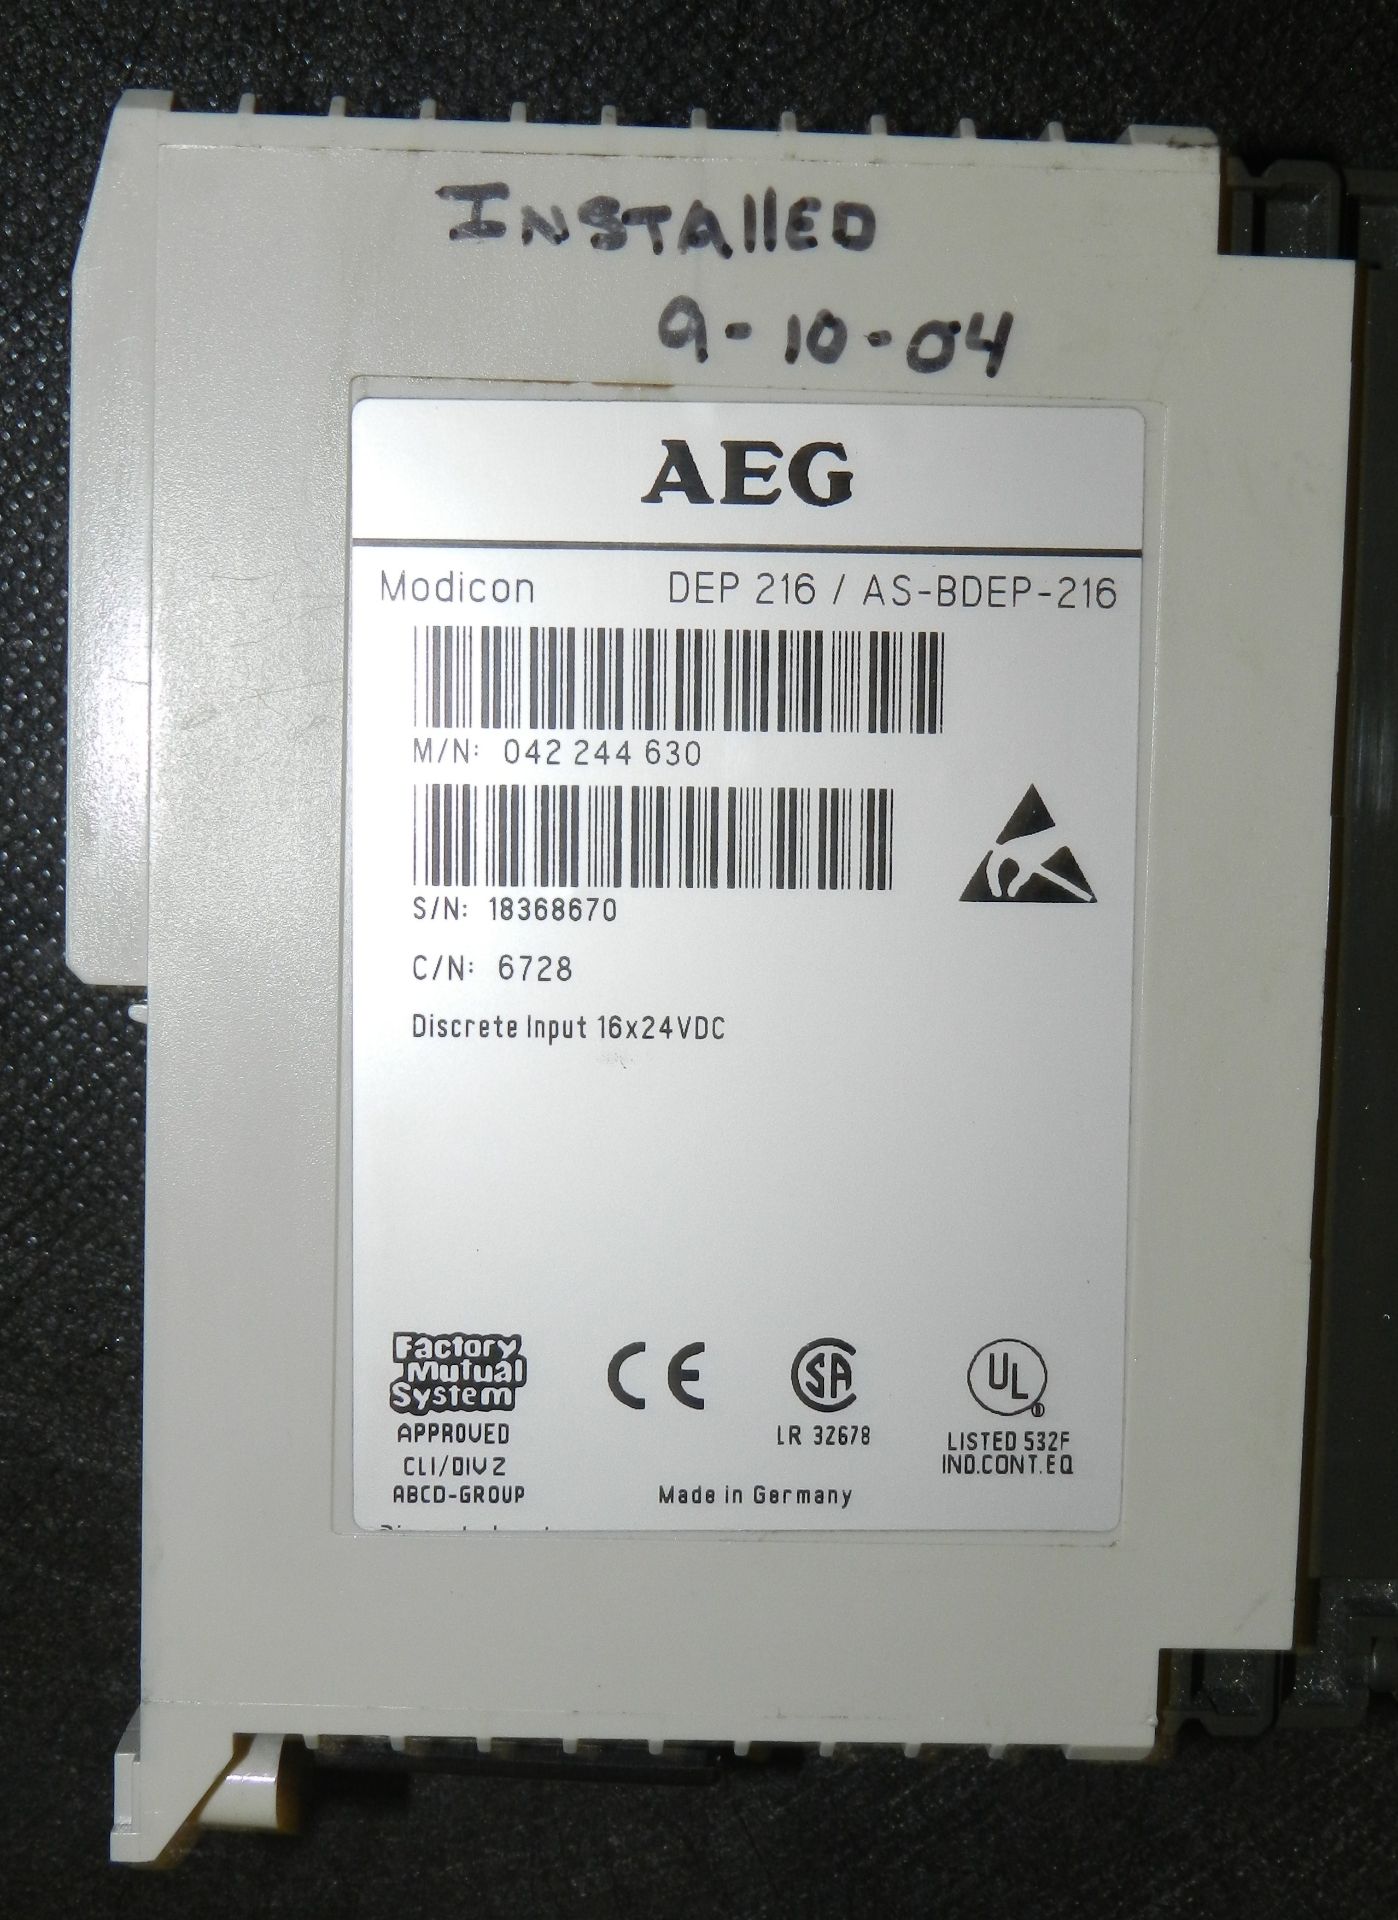 AEG Modicon PC-A984-145 CPU I/O PLC Assembly Rack - Image 2 of 11